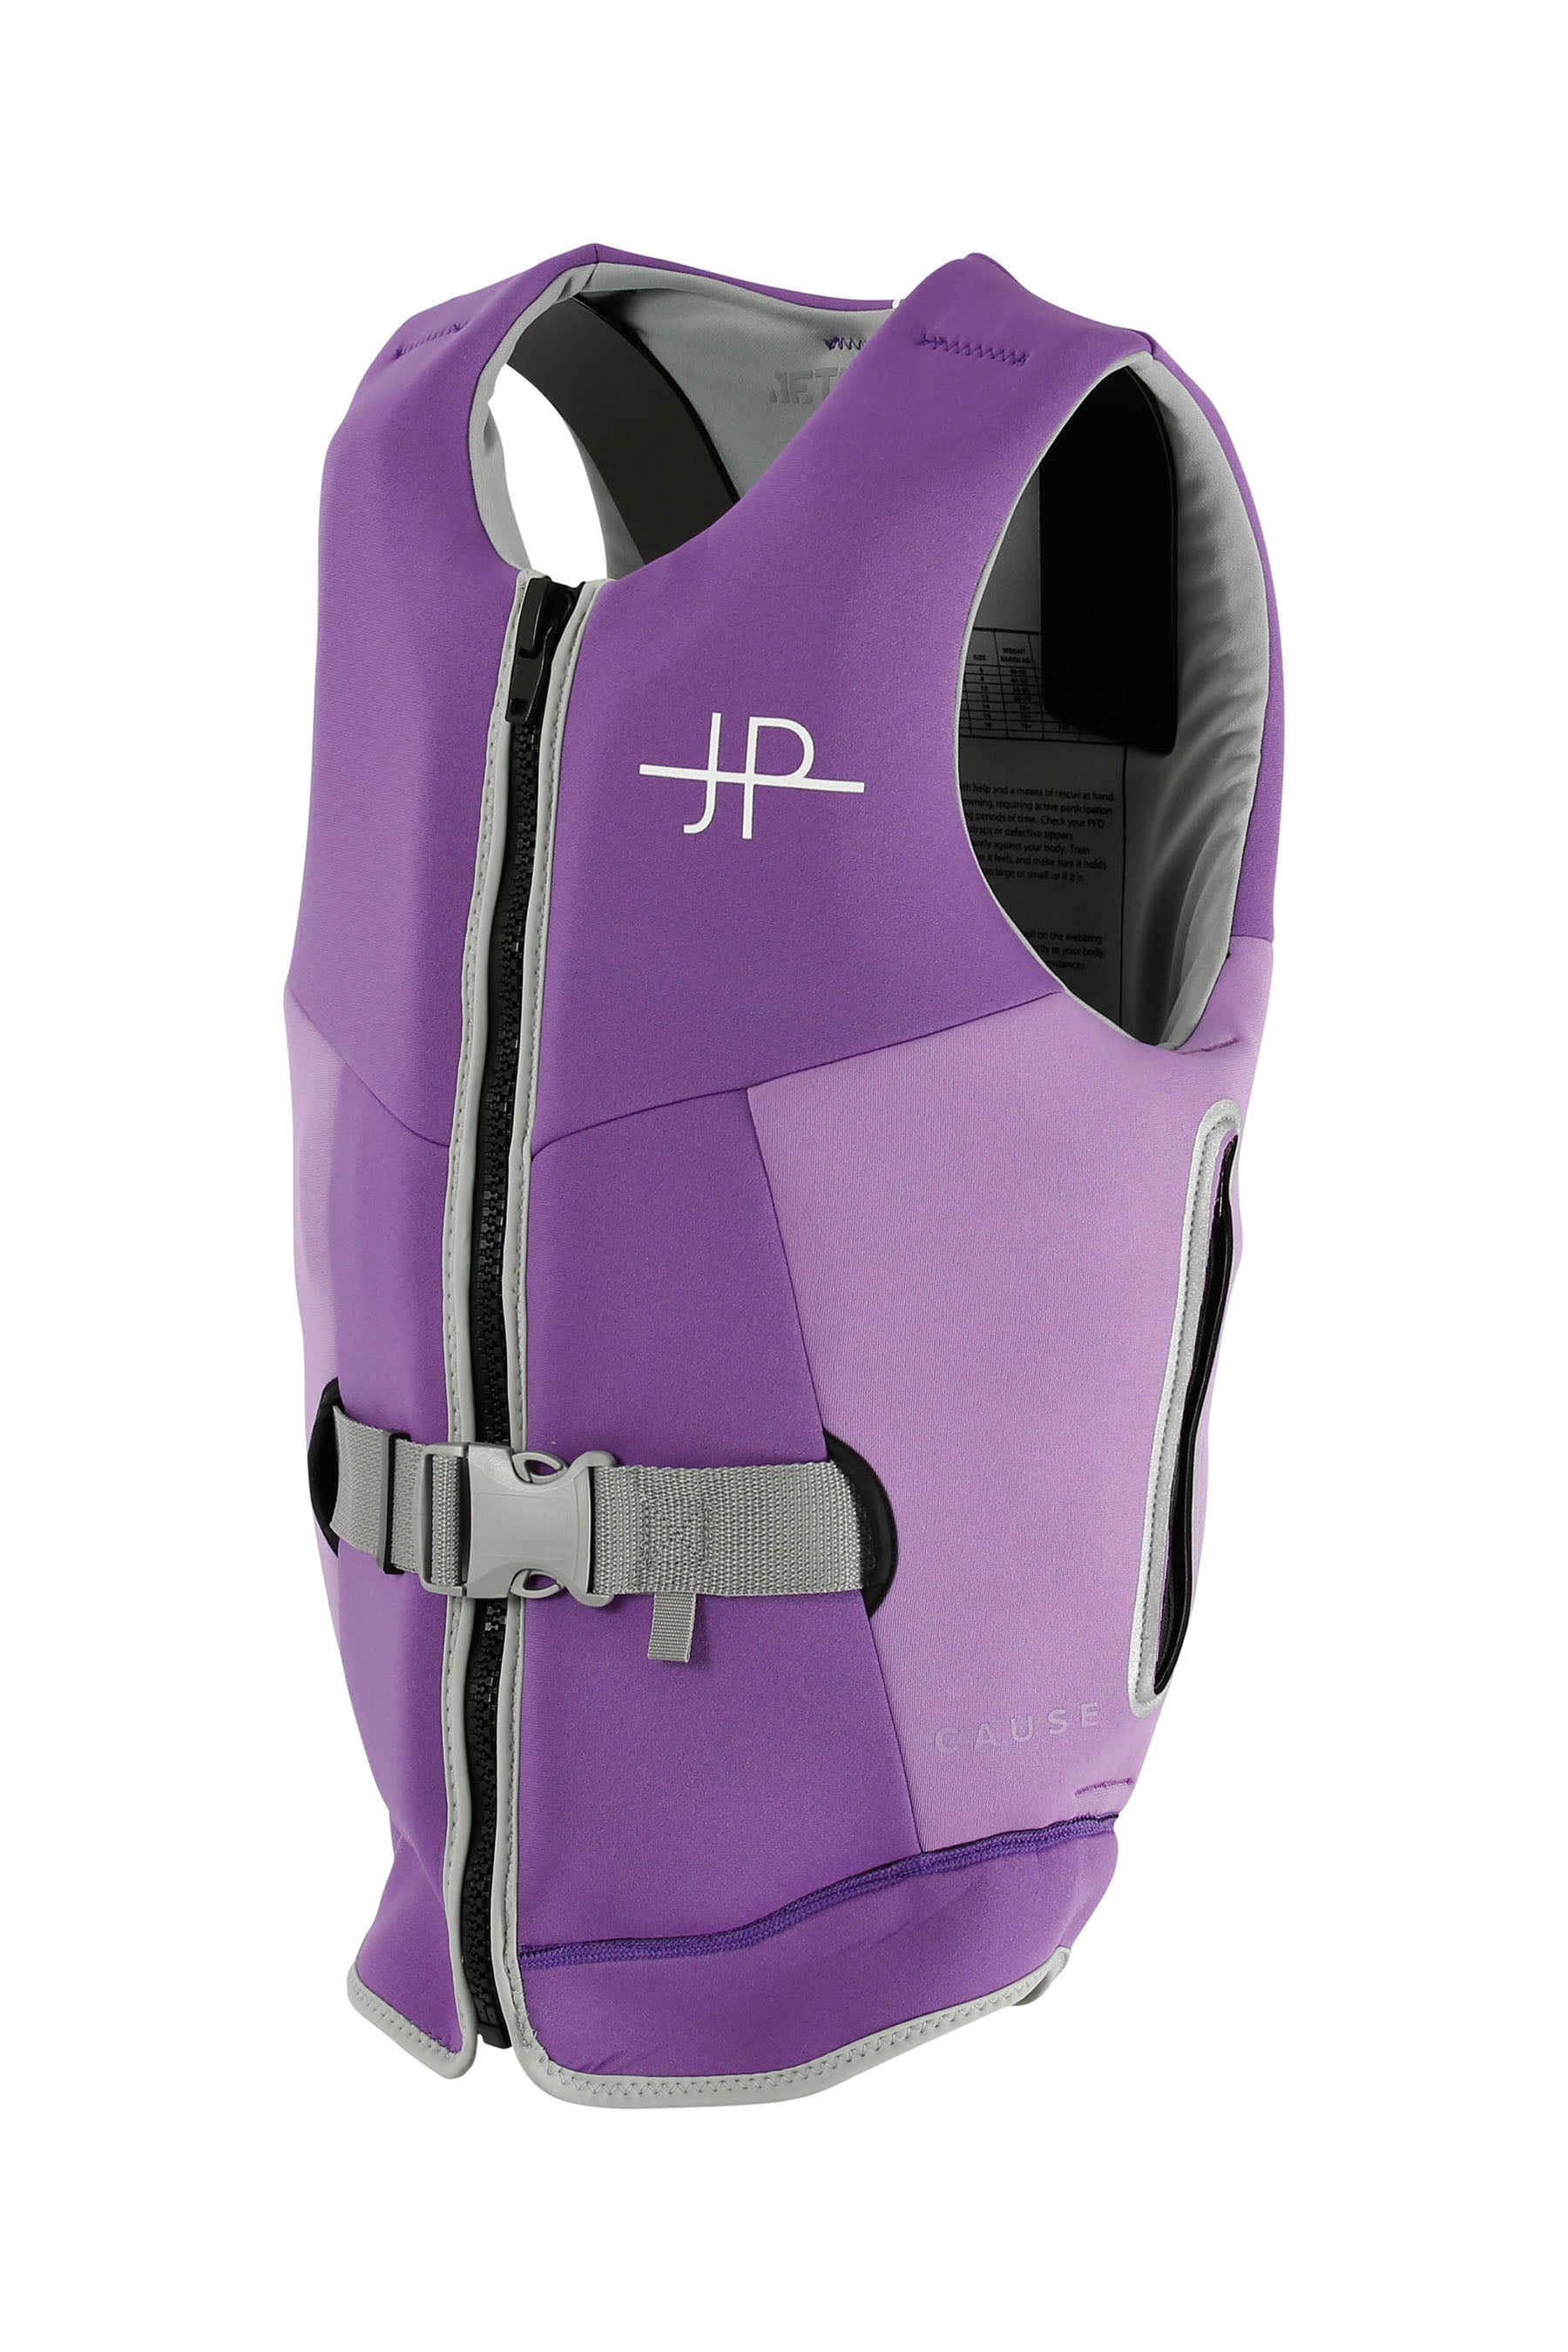 Jetpilot Cause F/E Ladies Neo Life Jacket - L50S Purple 2